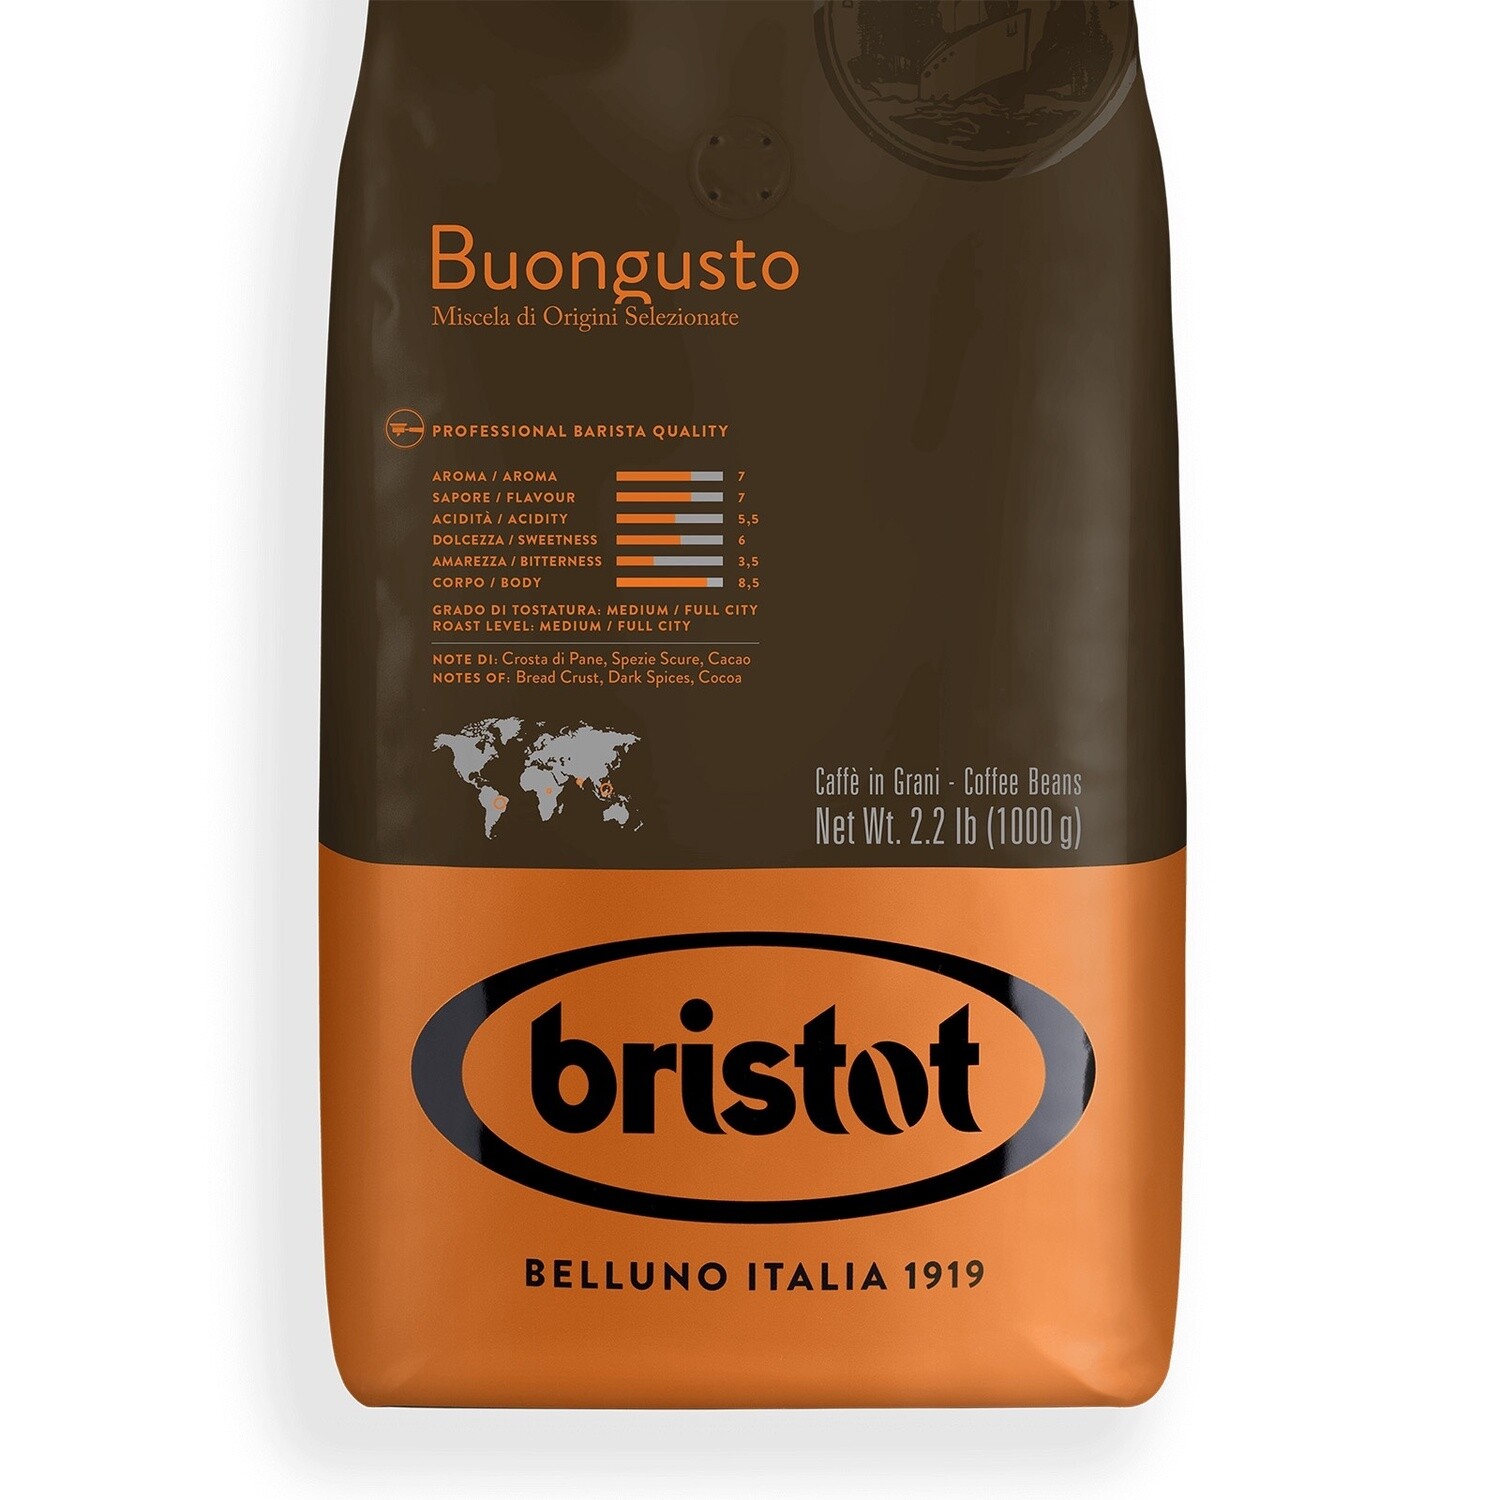 Bristot Buongusto 1 kg 2.2 lbs Whole Bean Coffee